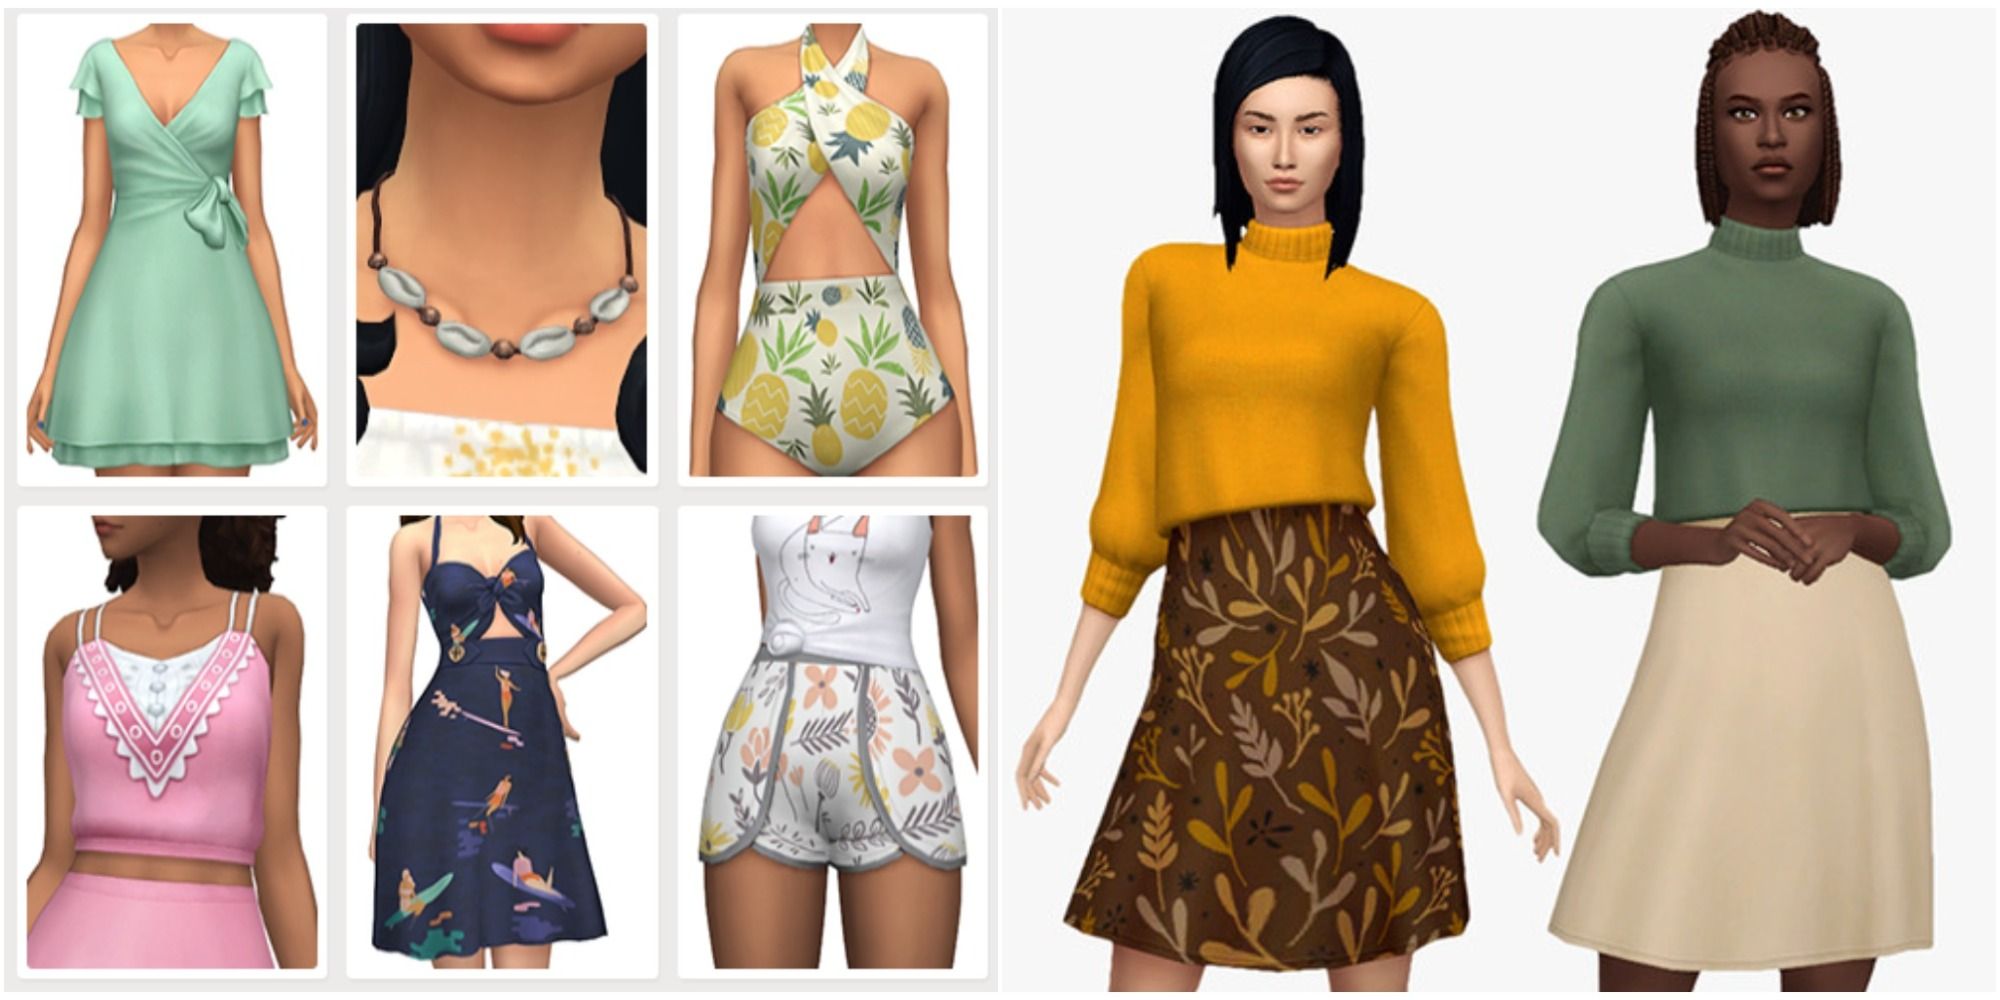 Aflede instinkt vegetation The Sims 4: Best Adult Clothing CC Creators